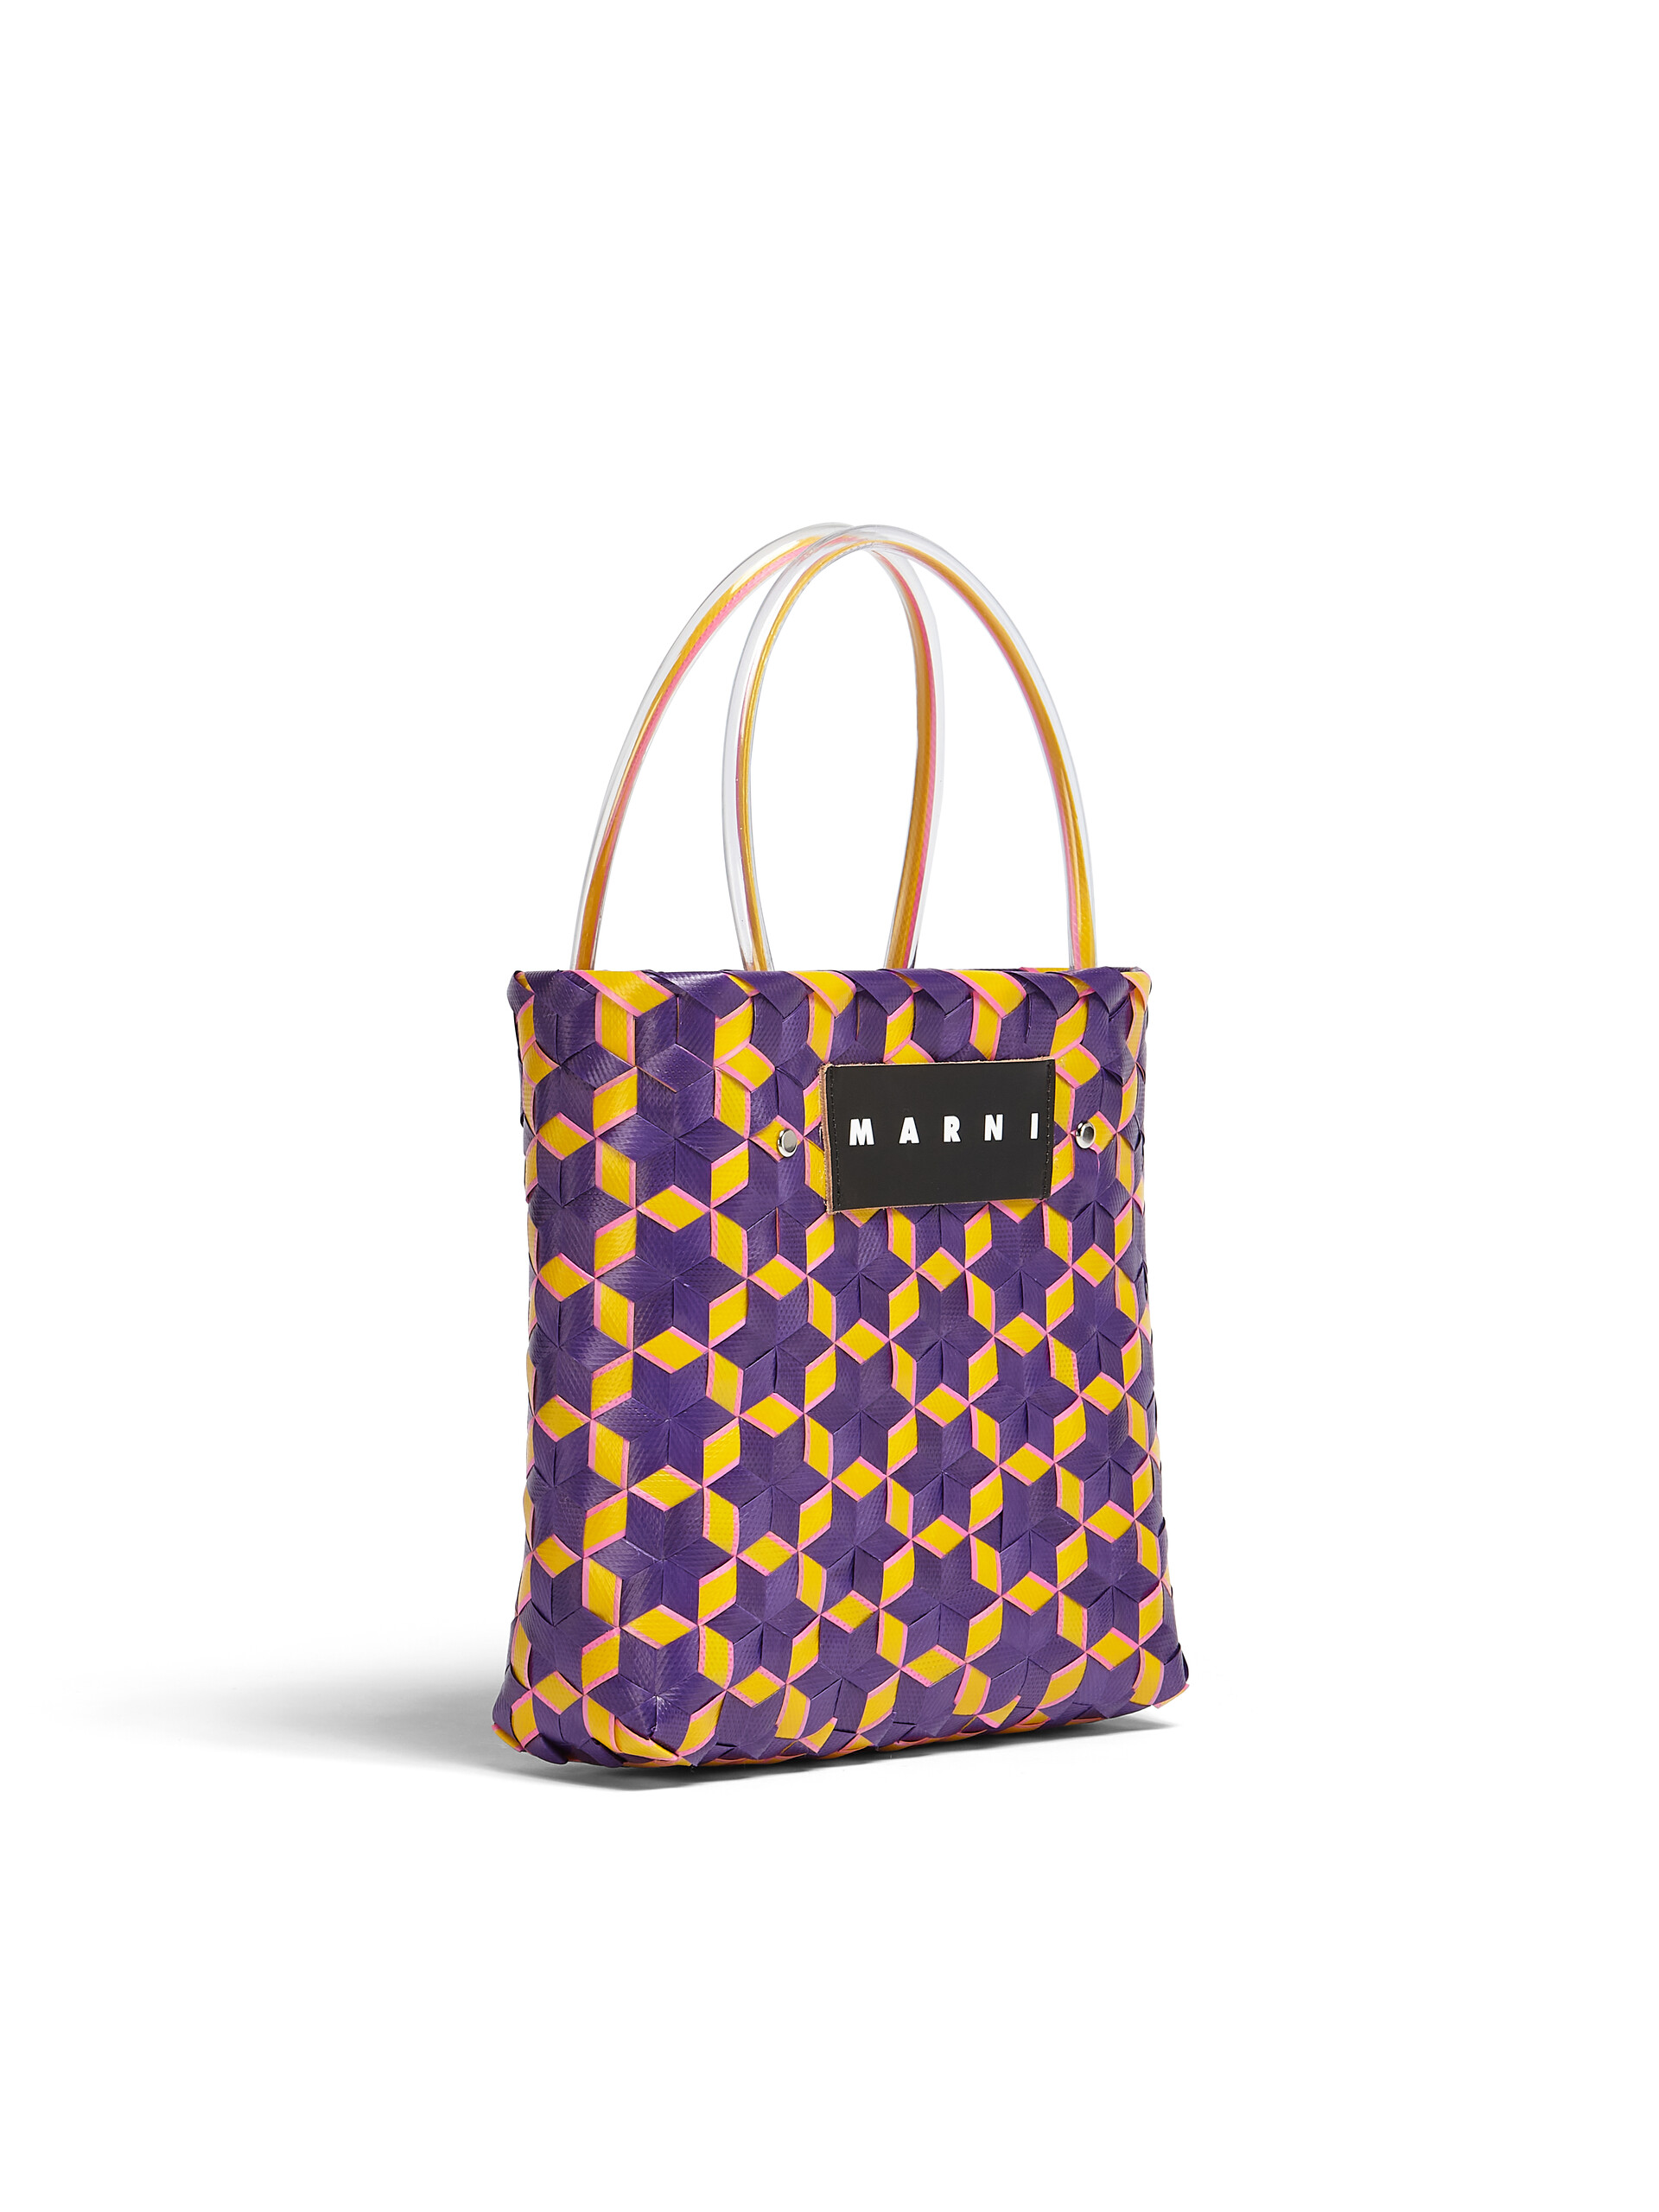 MARNI MARKET bag in purple star woven material - Bags - Image 2